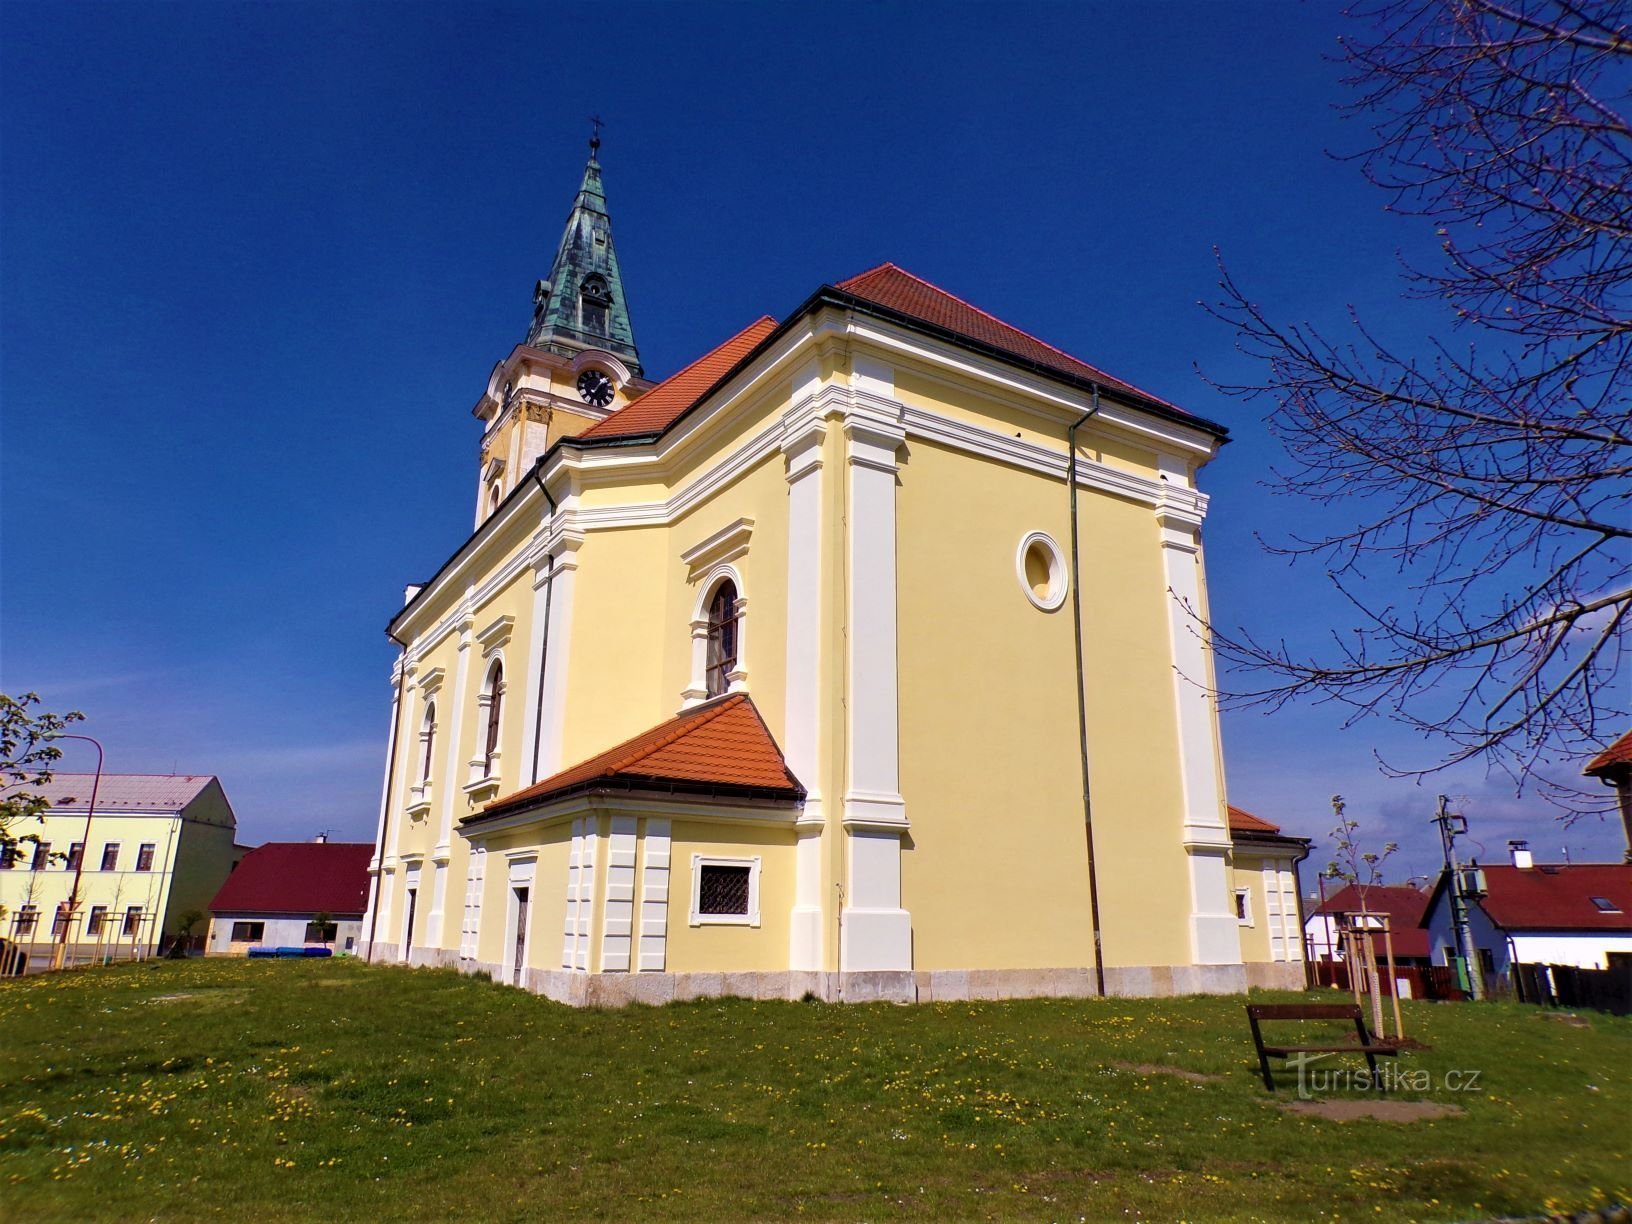 Iglesia de San Stanislav, obispo y mártir (Smidary, 30.4.2021/XNUMX/XNUMX)